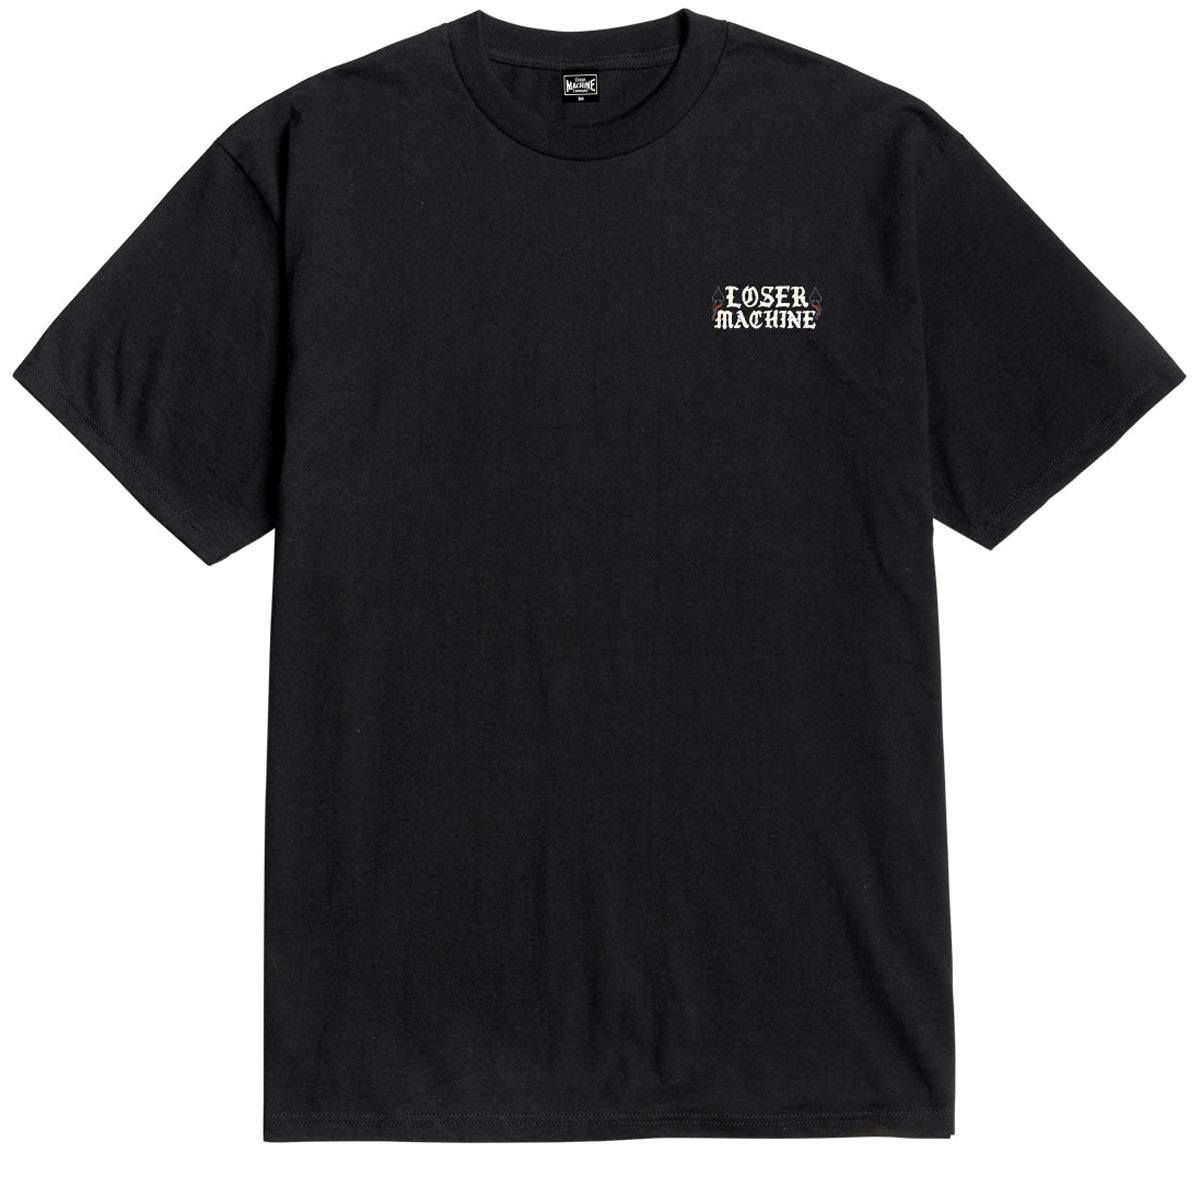 Loser Machine Spade Glow Long Sleeve T-Shirt - Black image 2